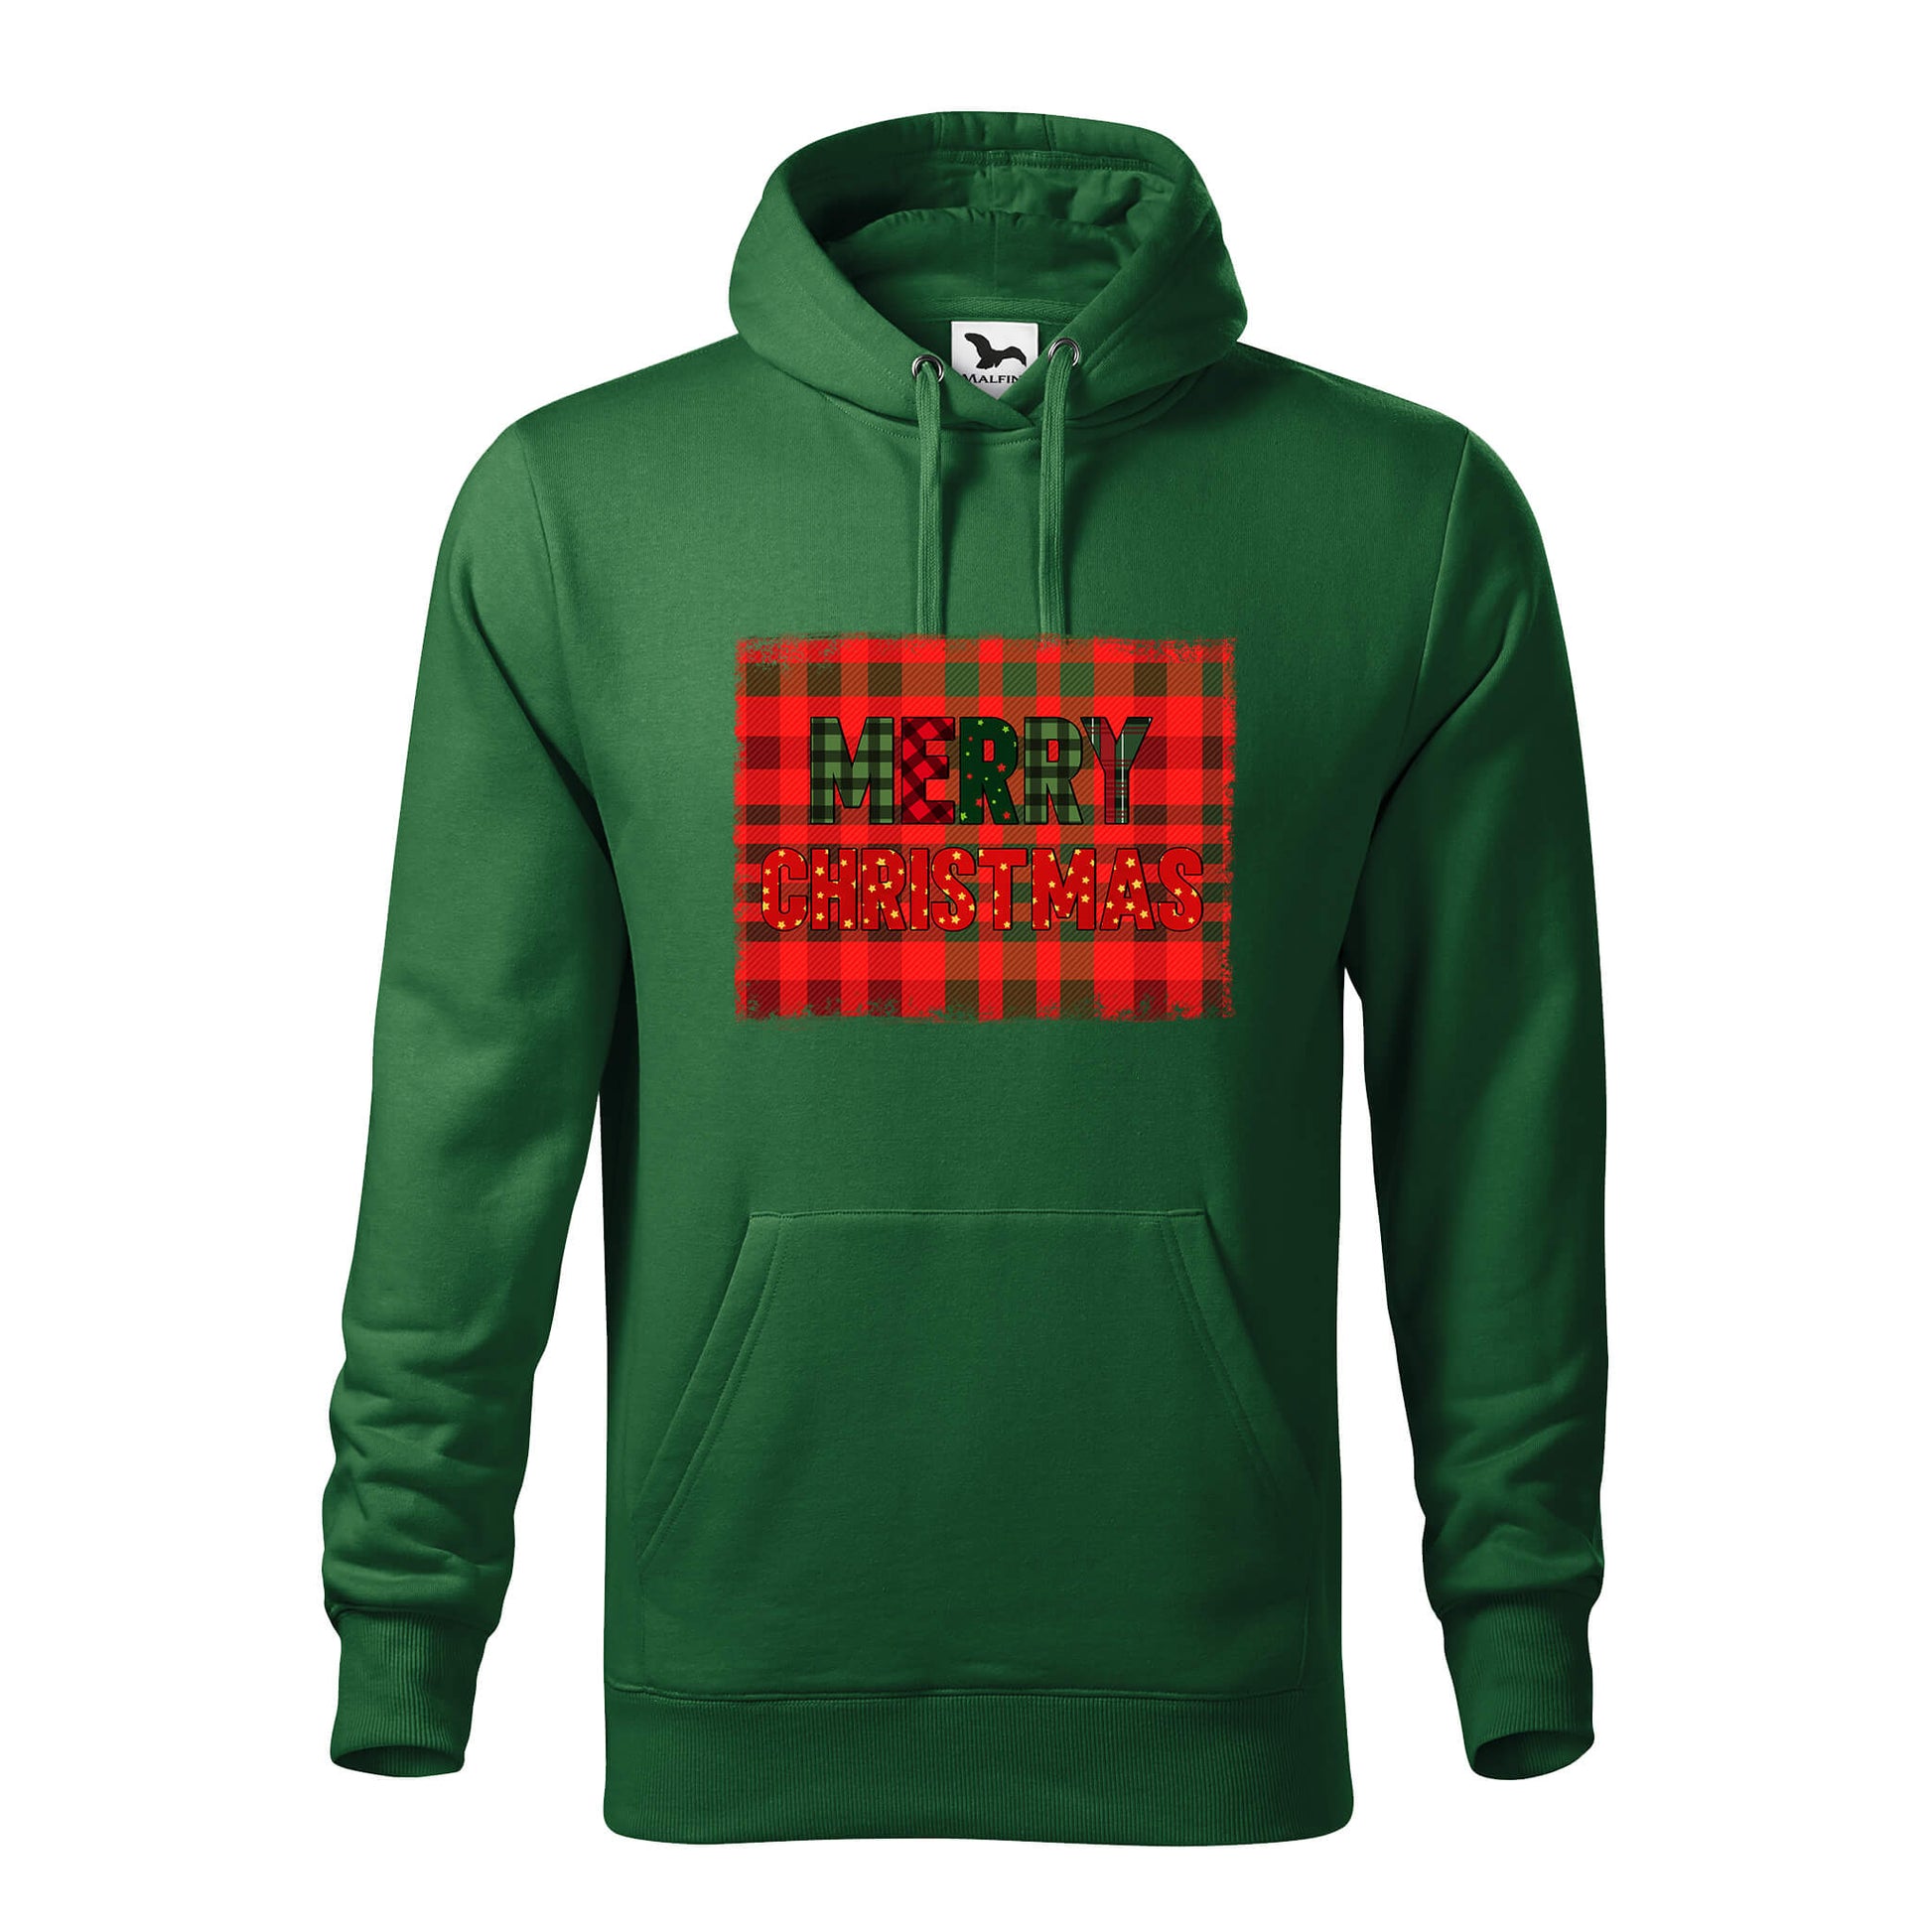 Merry christmas4 hoodie - rvdesignprint